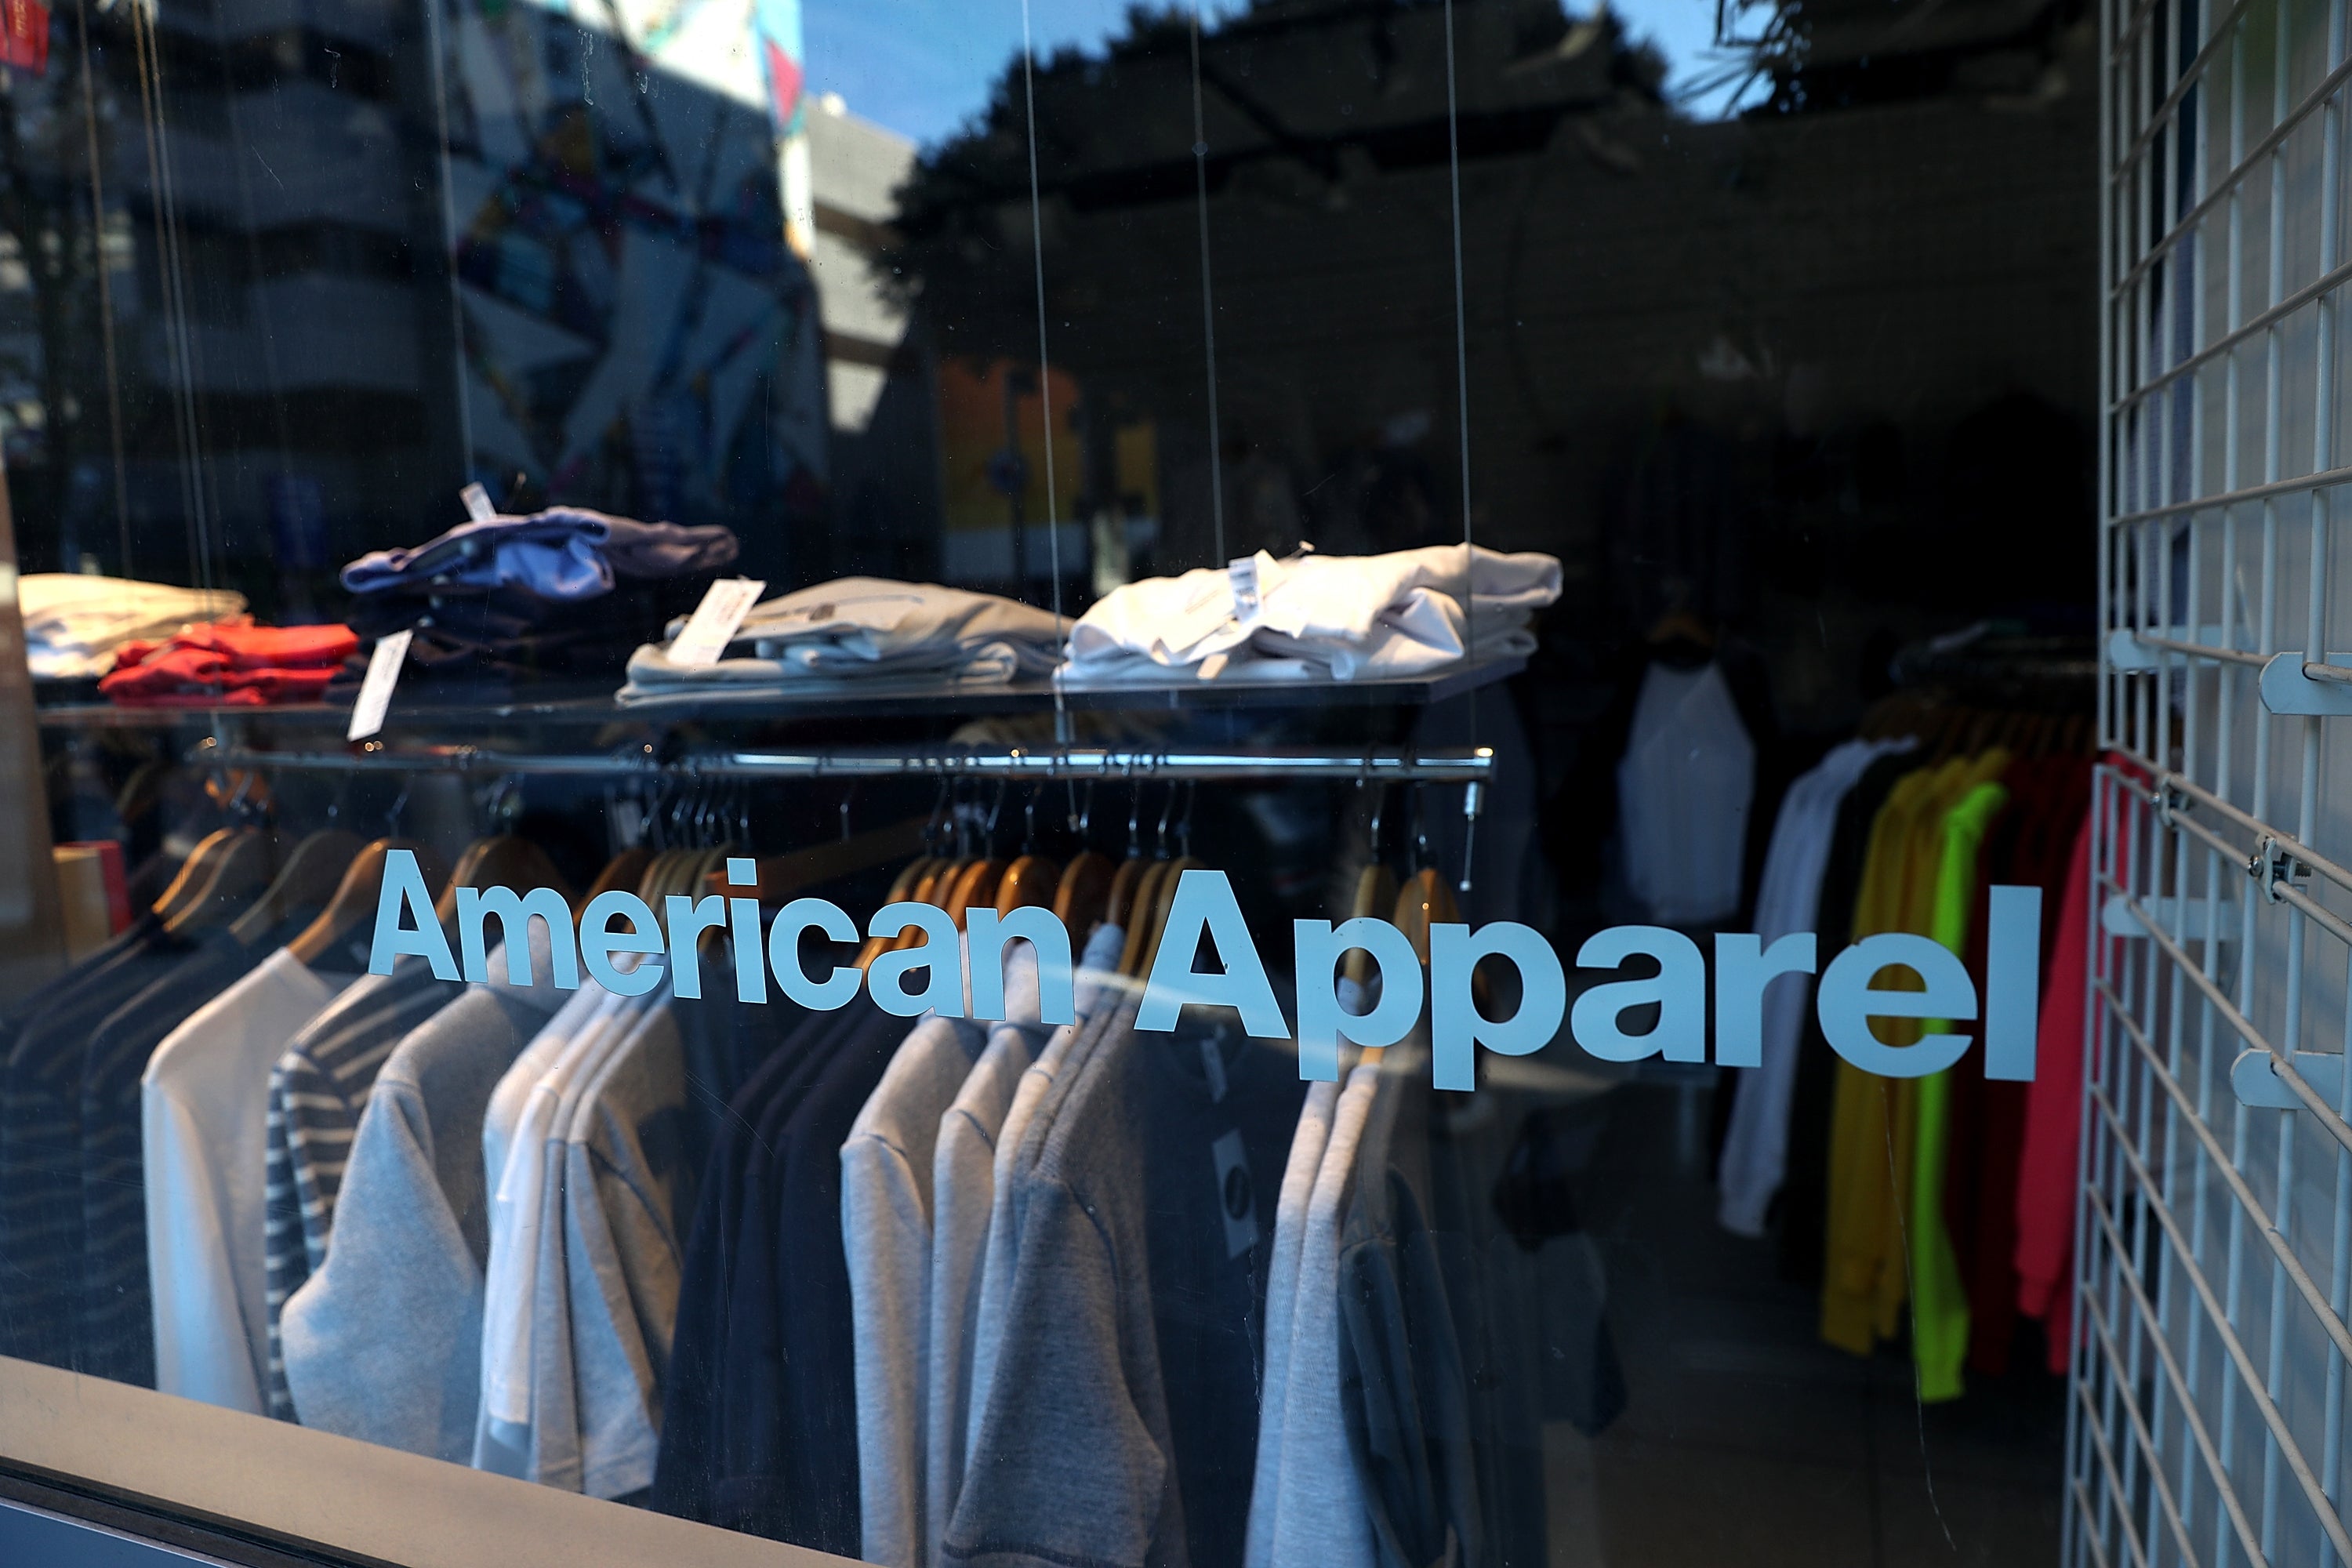 american apparel clothing